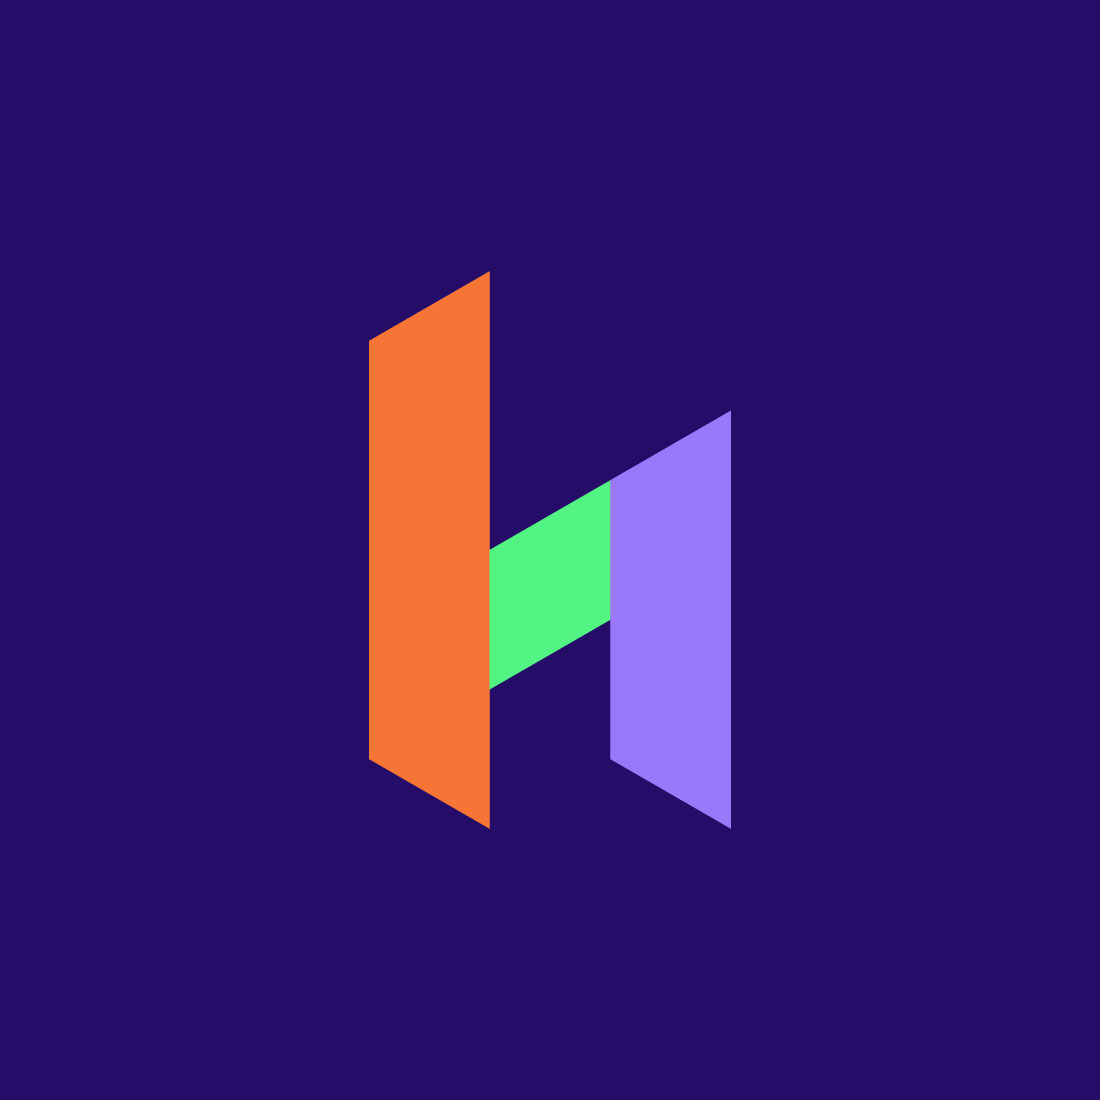 Modern H Letter Logo Design Template cover image.